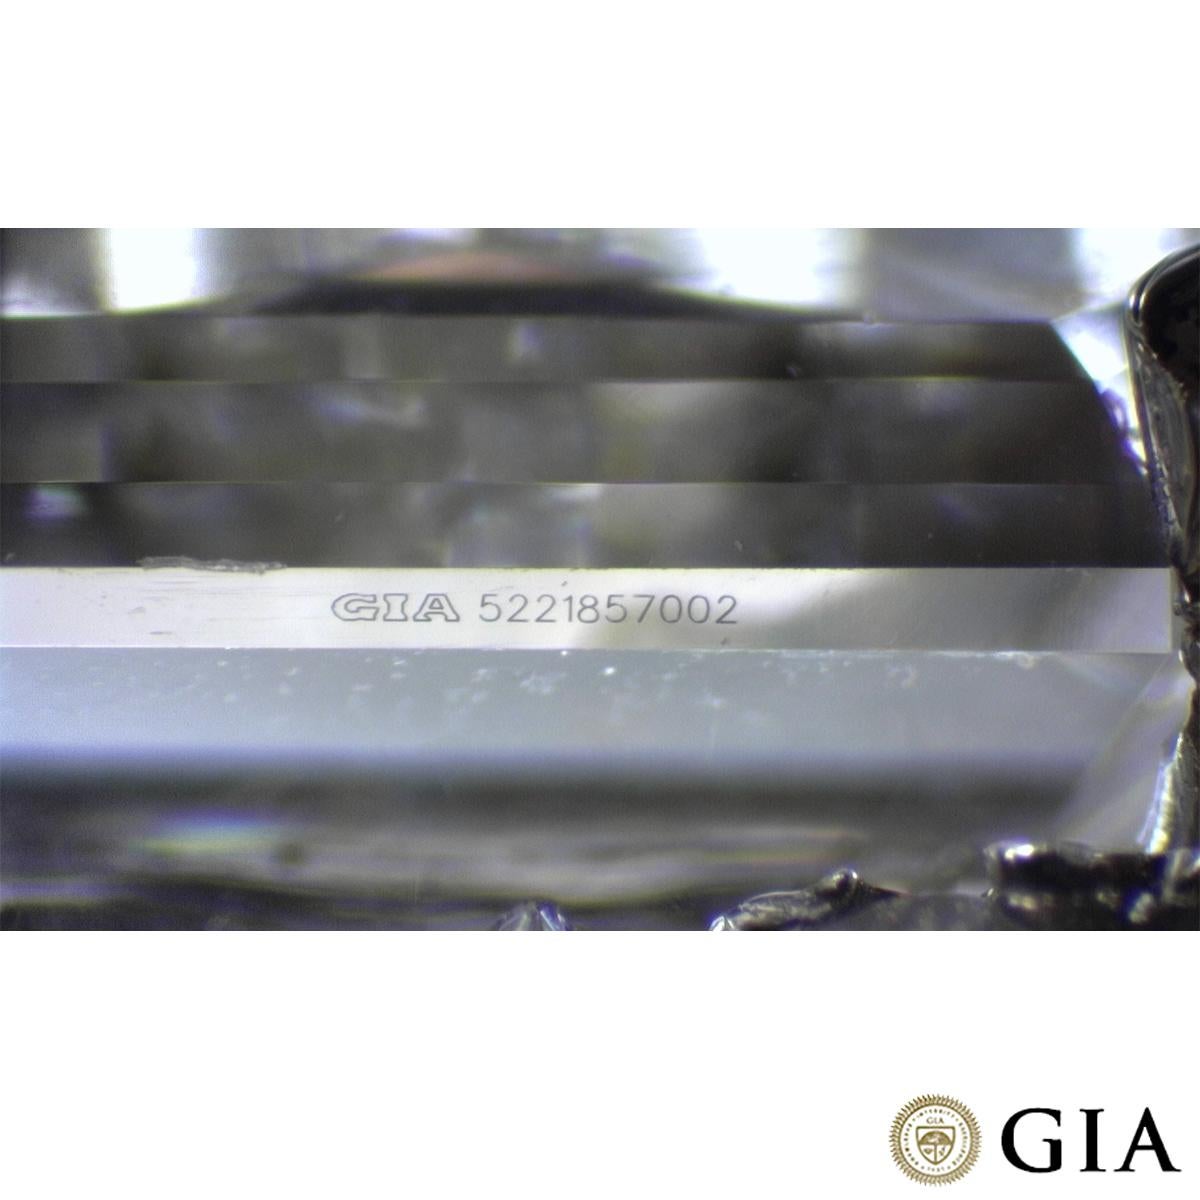 GIA Certified White Gold Emerald Cut Diamond Pendant 0.92 Carat G/SI1 For Sale 1